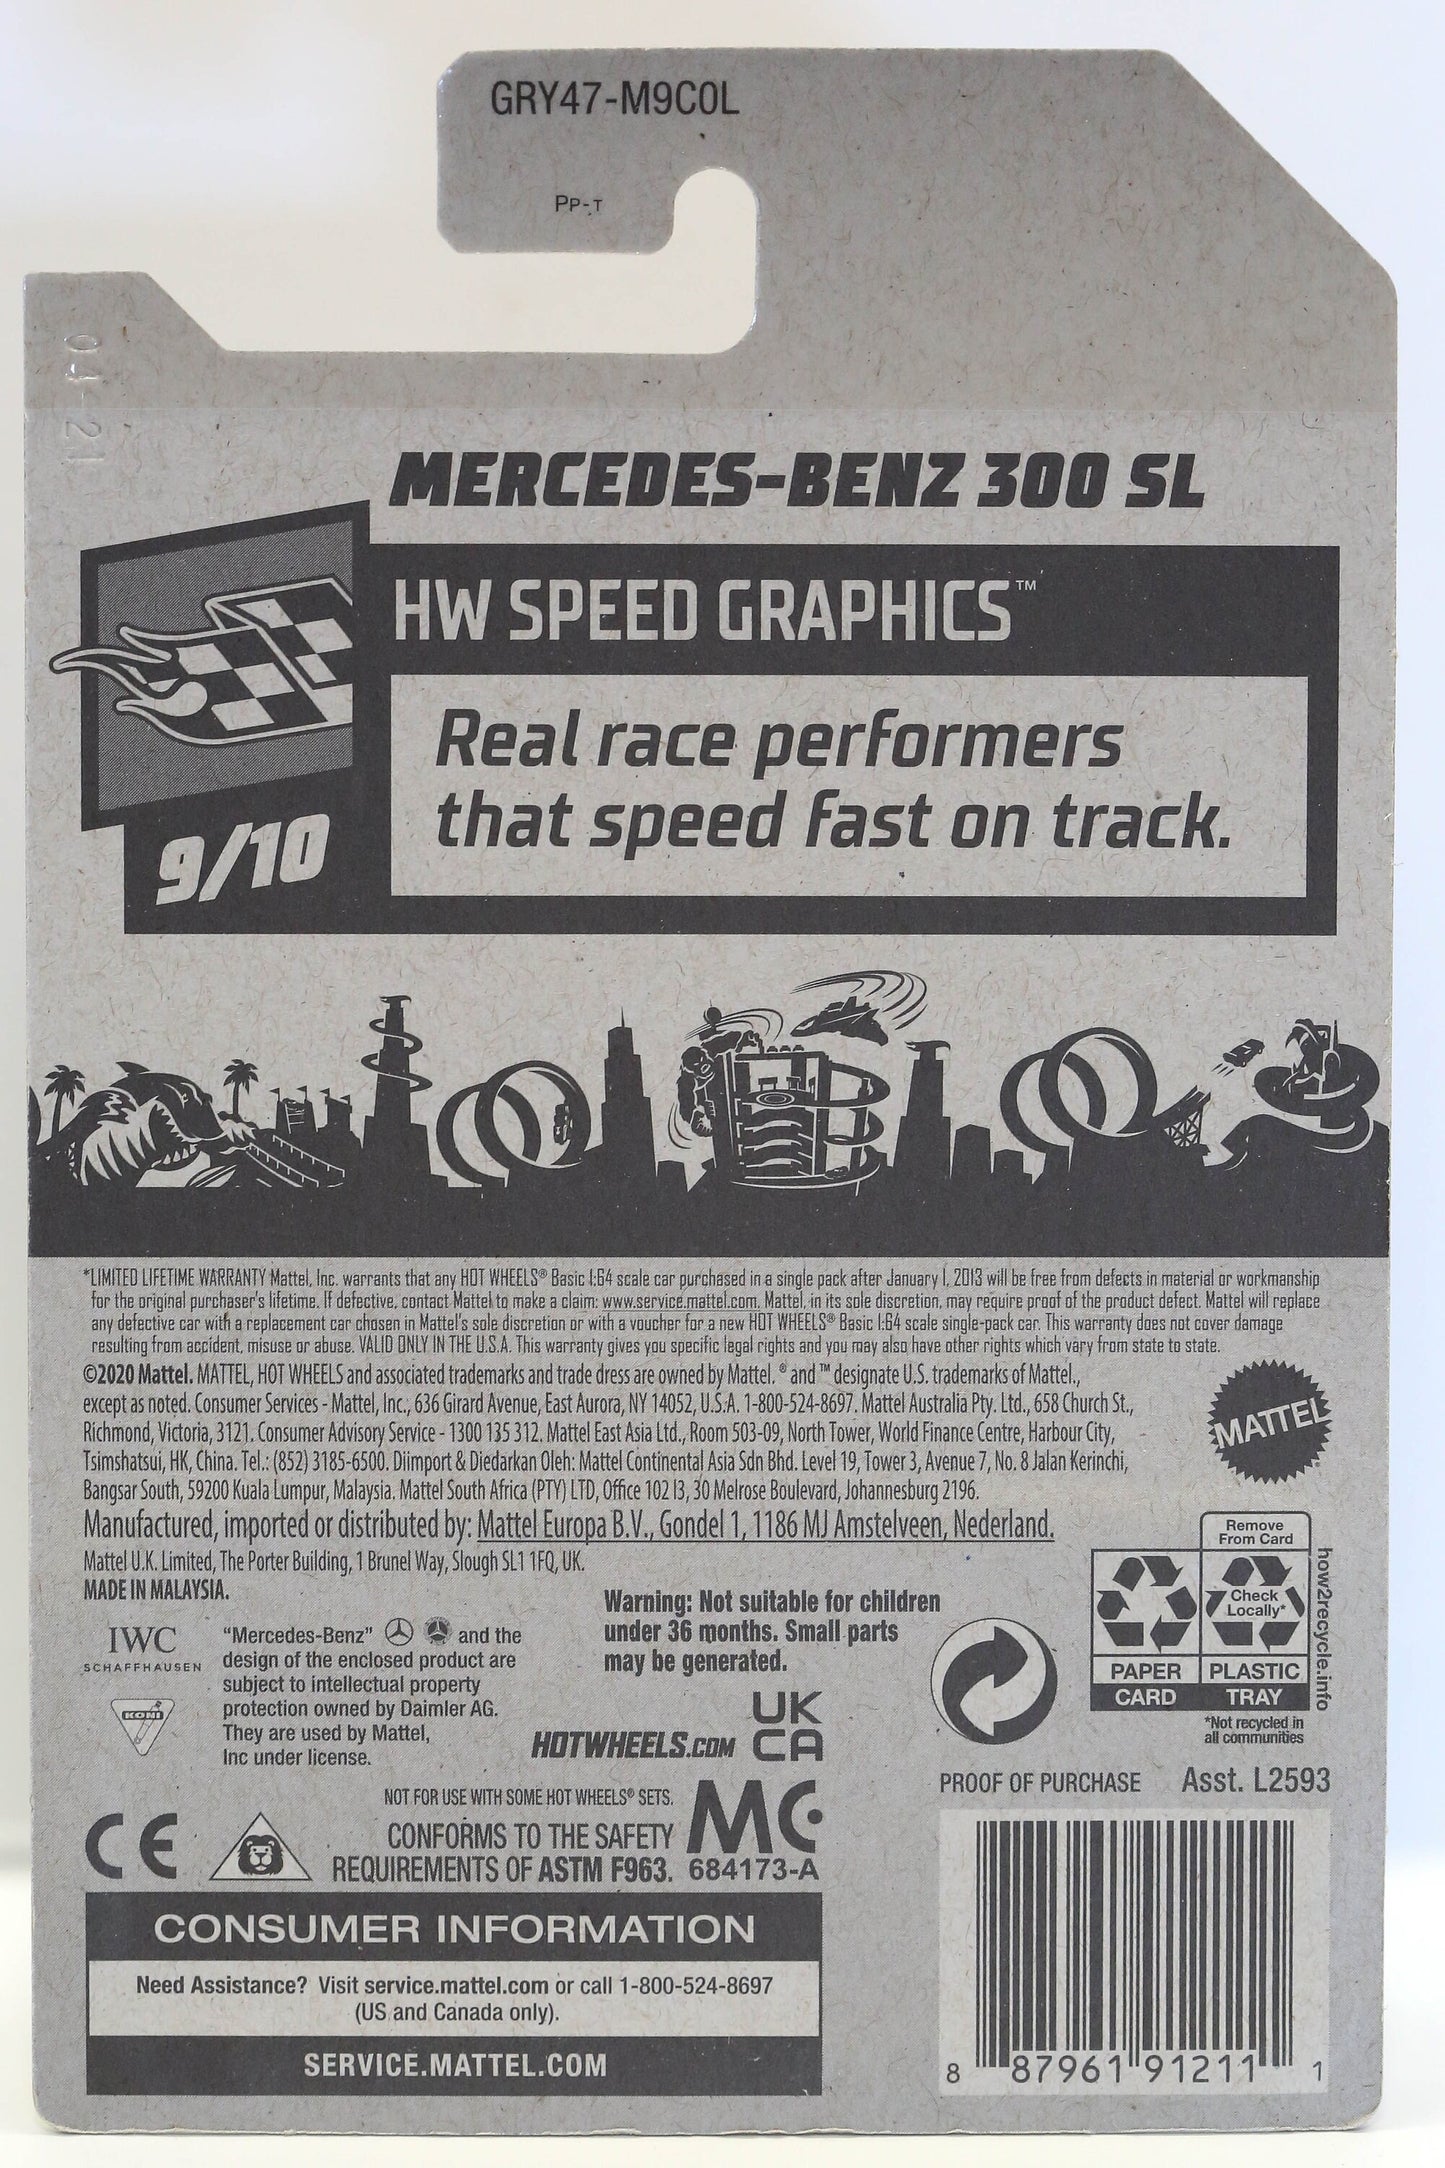 Hot Wheels Mercedes-Benz 300 SL HW Speed Graphics GRY47